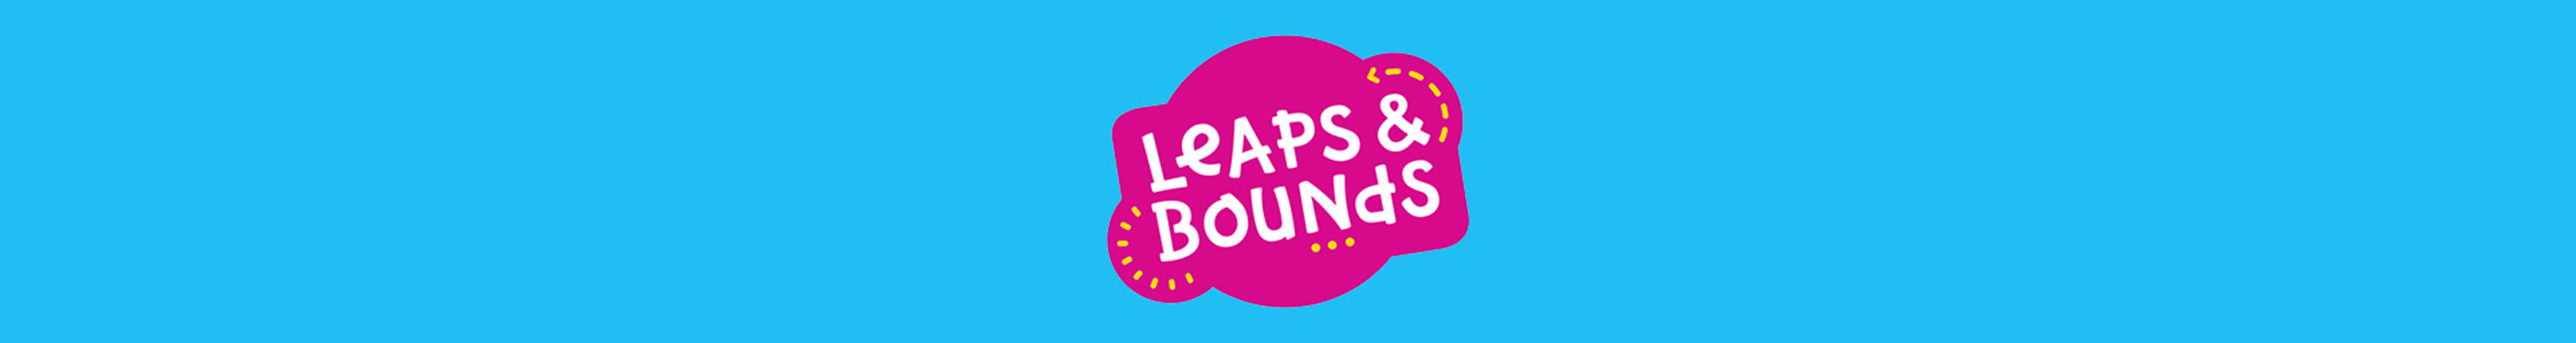 Leaps & Bounds Ponder & Puzzle Level 2 Dog Puzzle Toy, Large